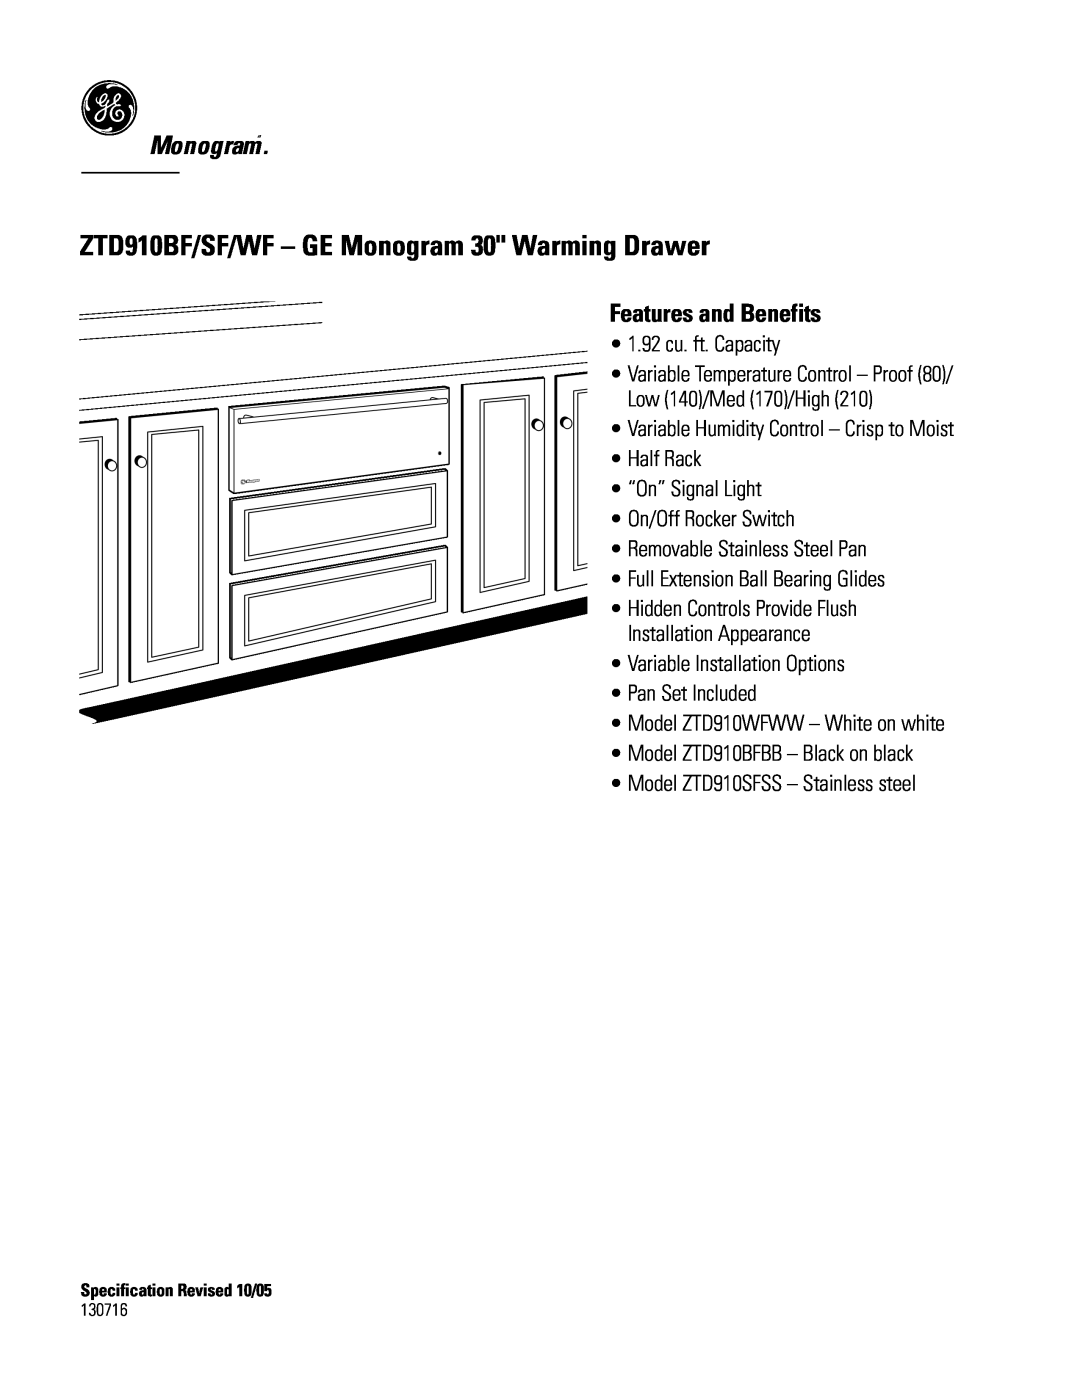 GE dimensions ZTD910BF/SF/WF - GE Monogram 30 Warming Drawer, Monogram“, Features and Benefits 